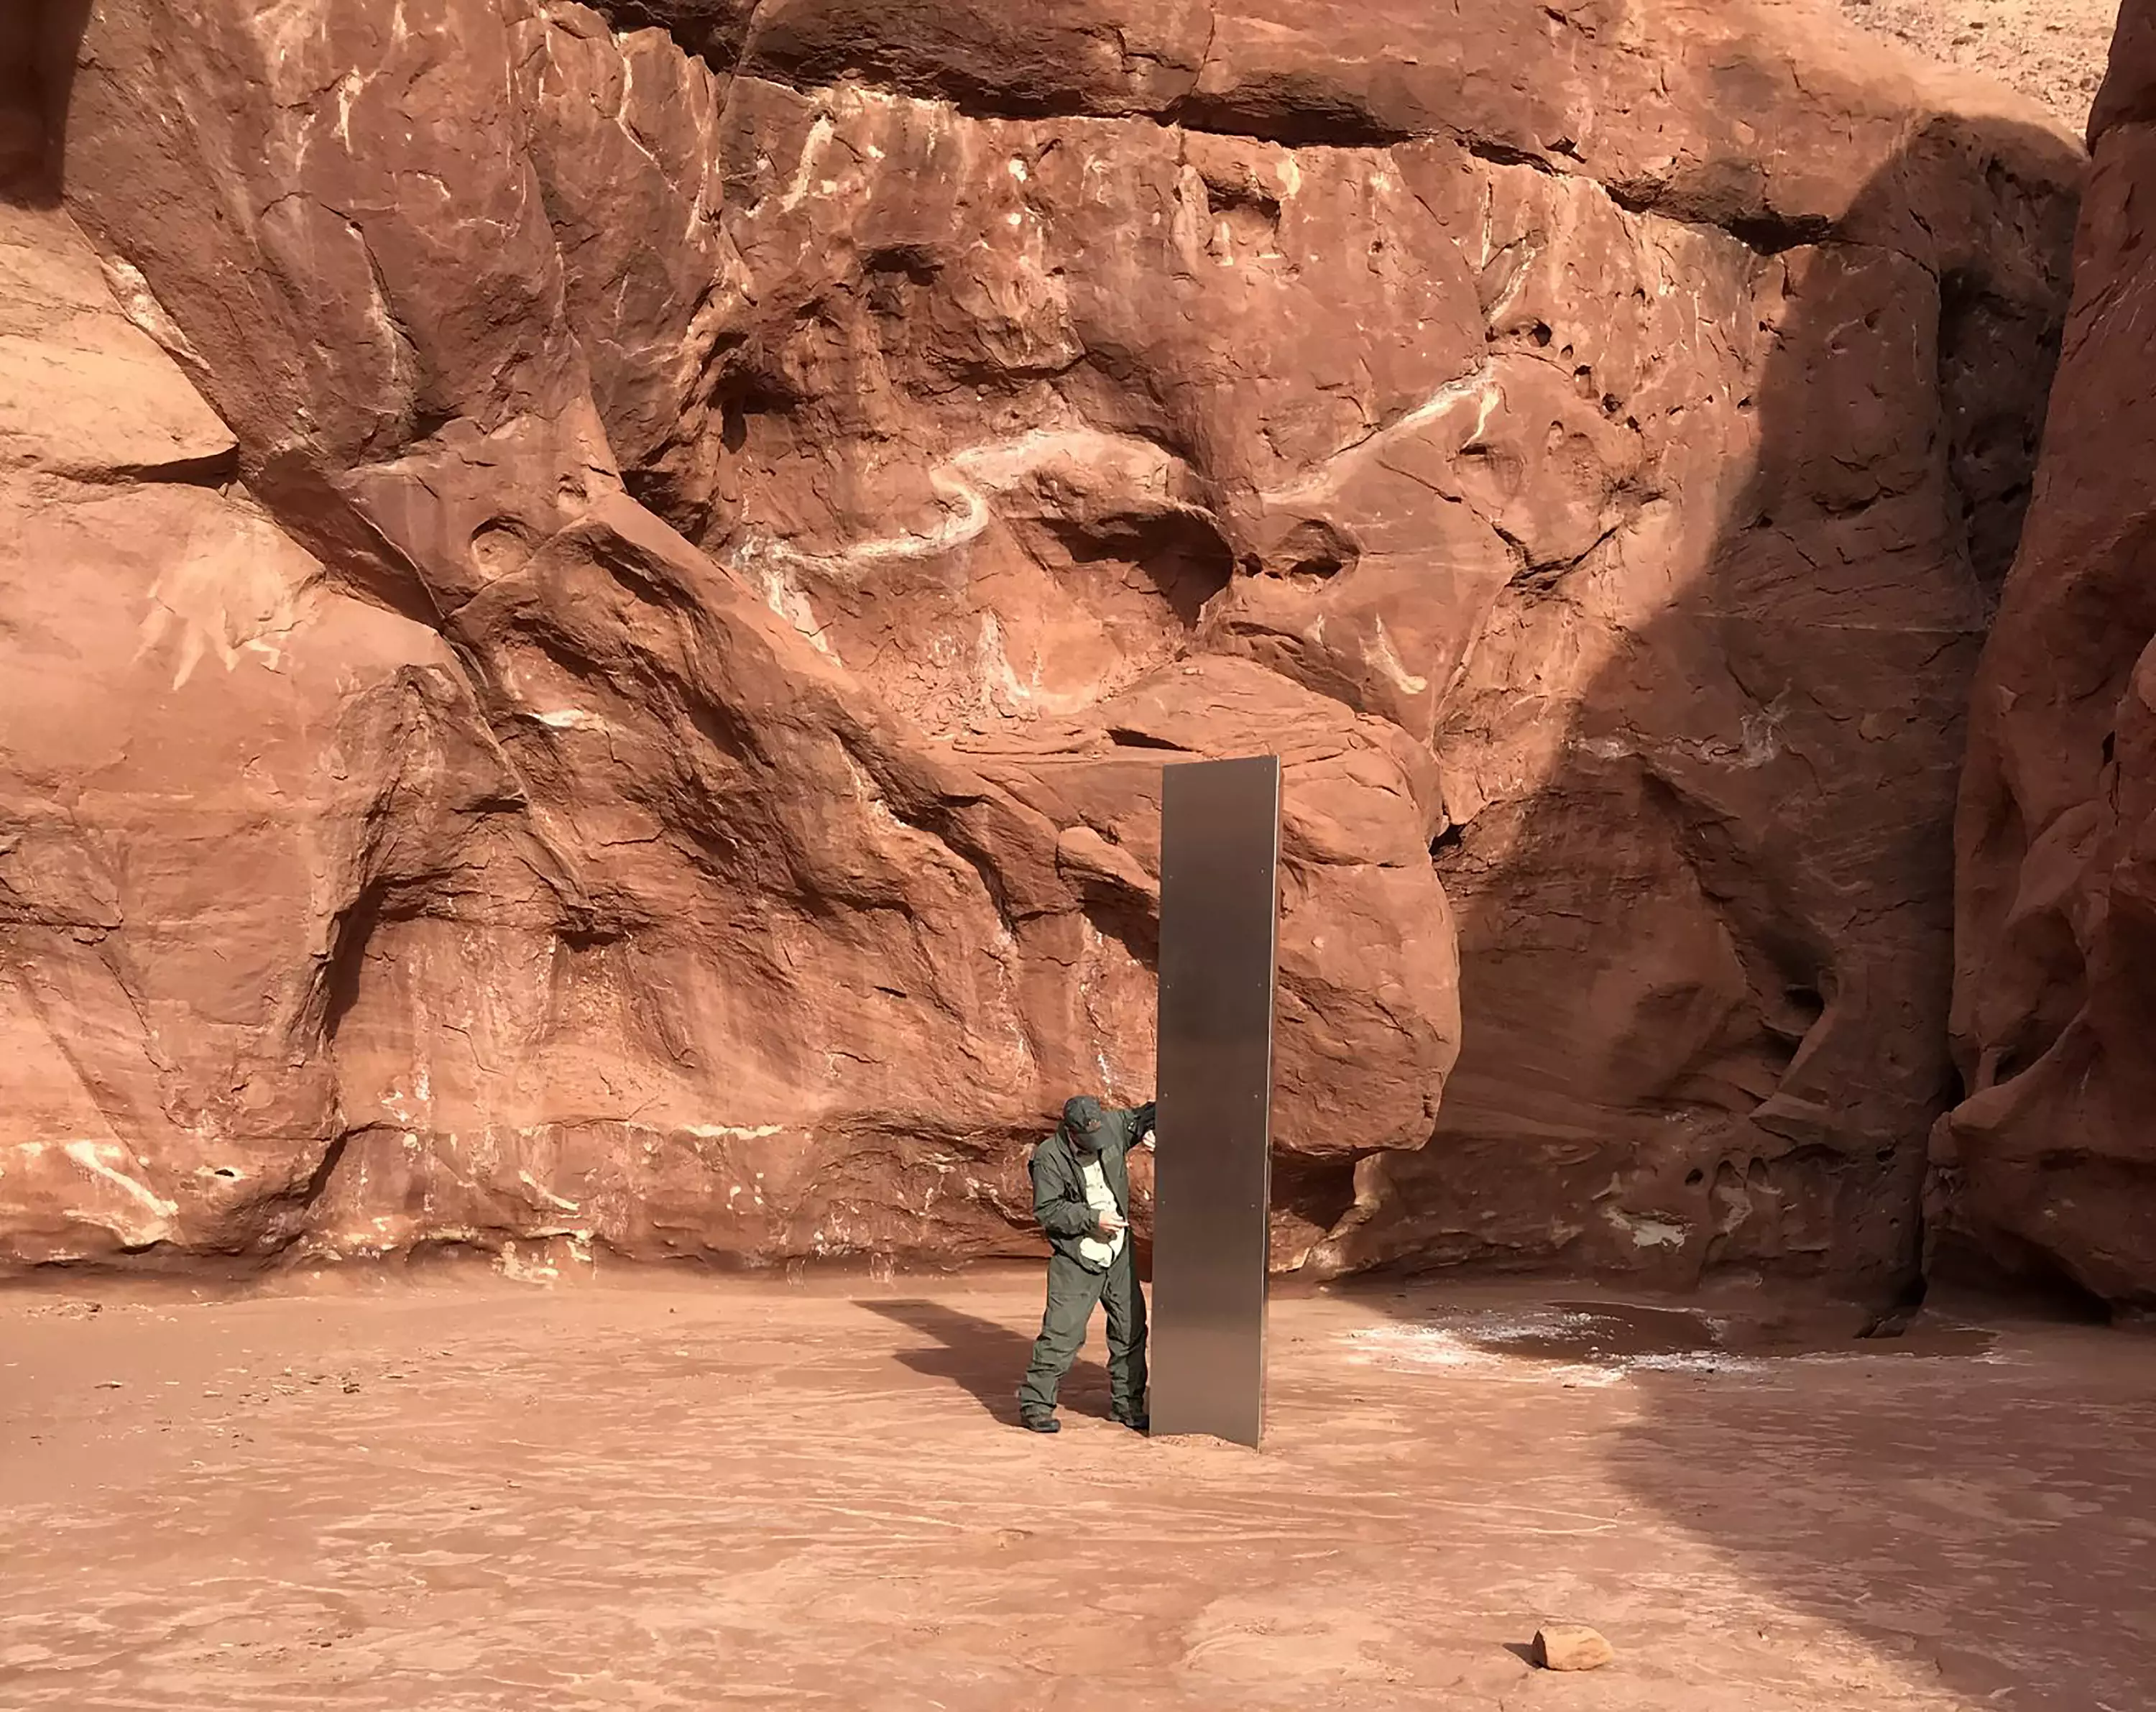 Here's the Utah monolith.